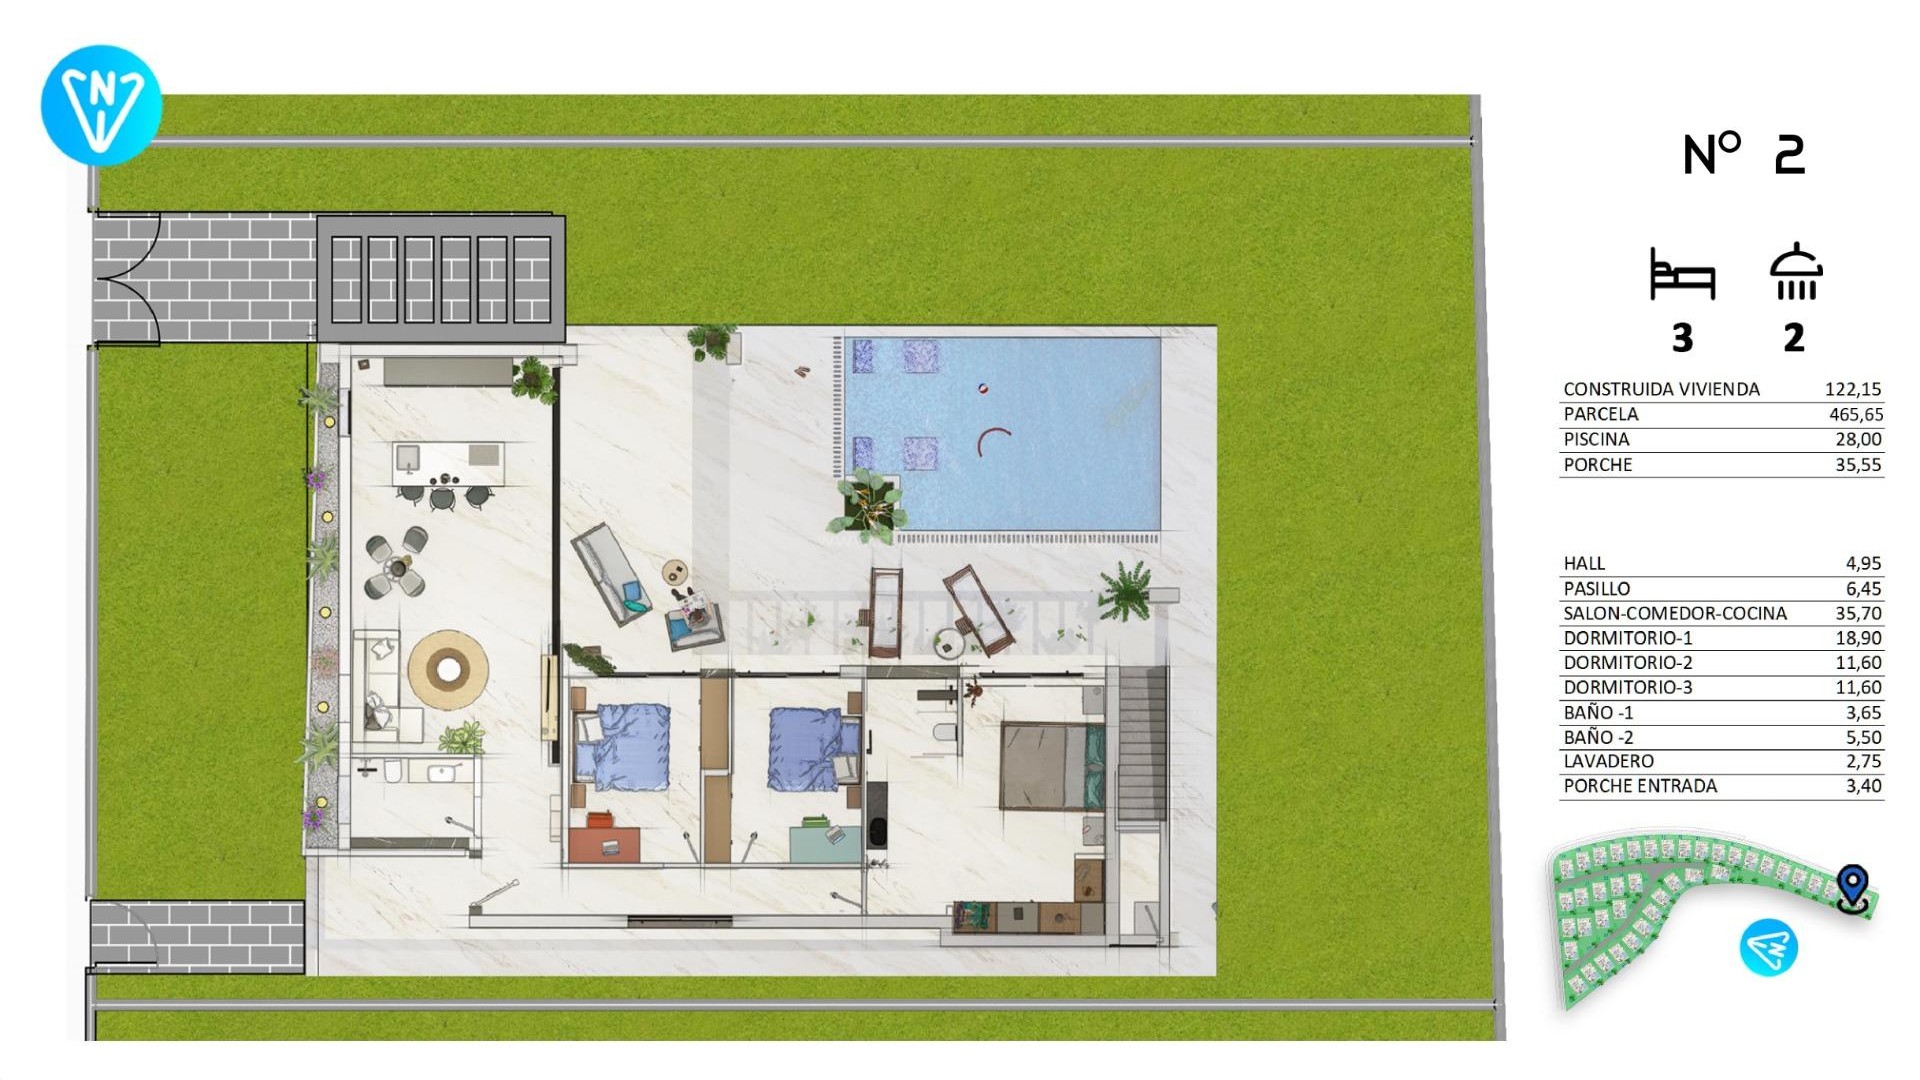 New houses/villas in La Finca Golf in Algorfa, 3 bedrooms, 2 bathrooms, garden with pool, terrace and solarium. Private parking space